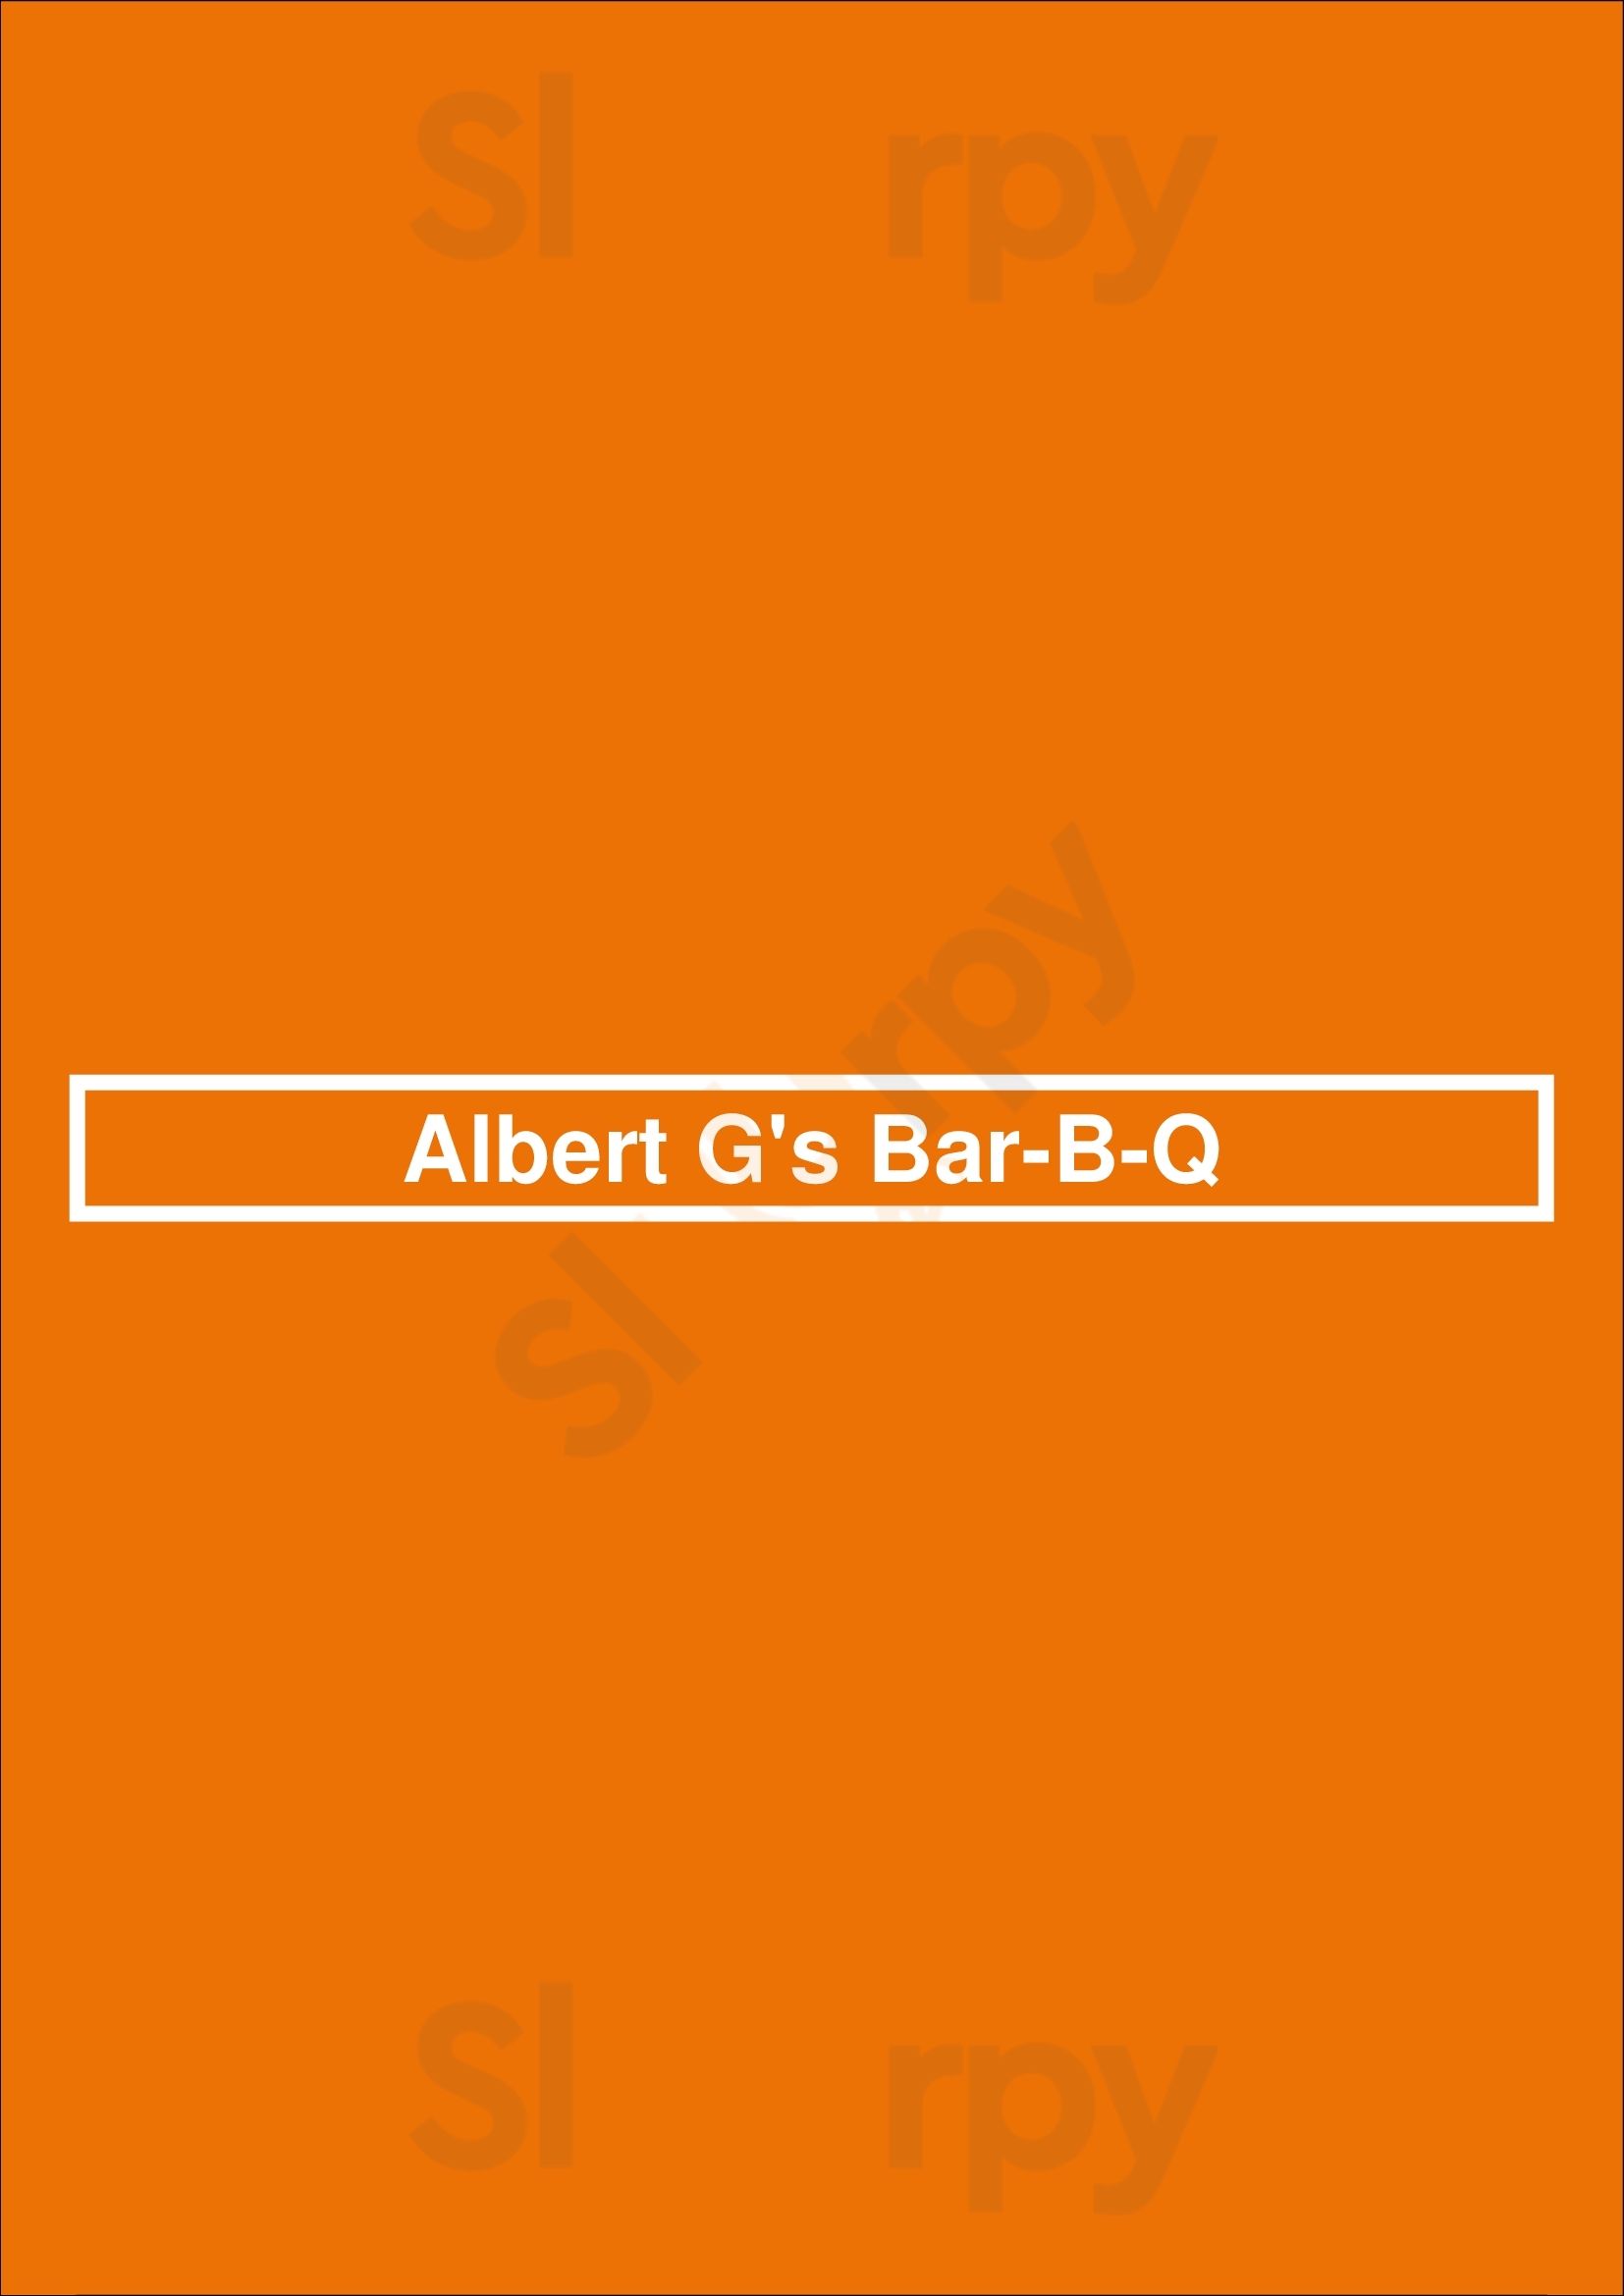 Albert G's Bar-b-q Tulsa Menu - 1